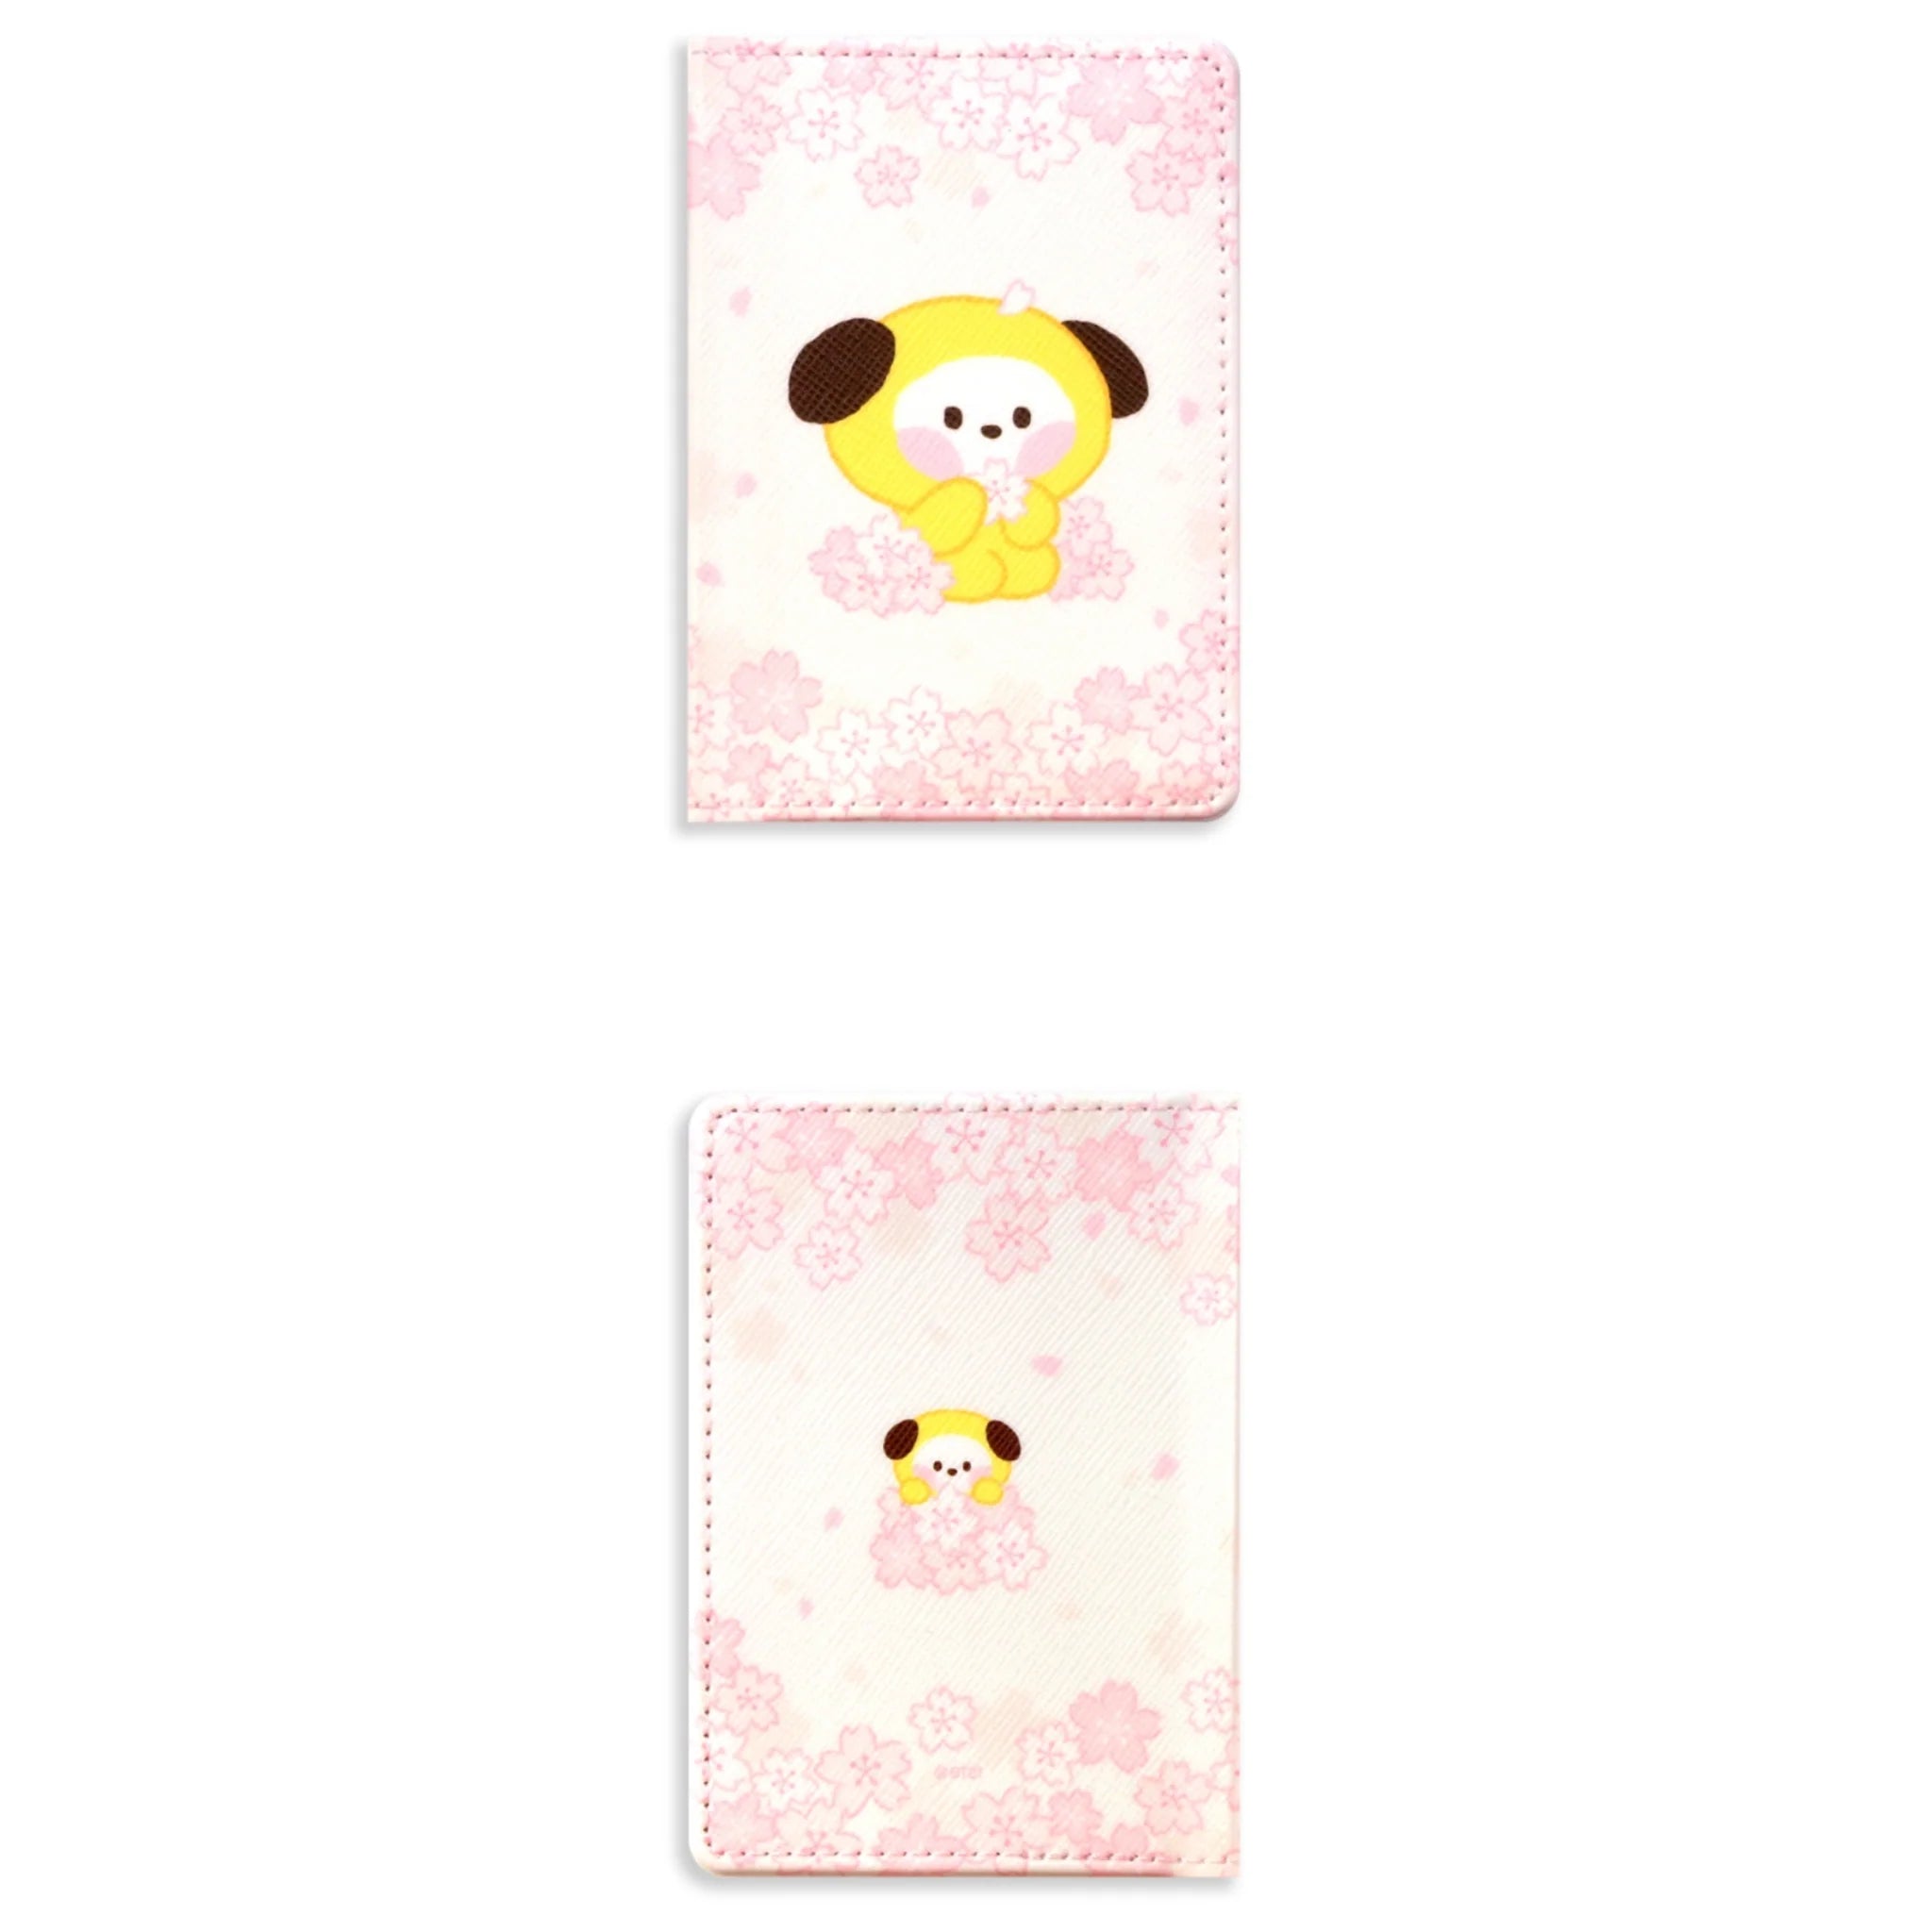 BT21 Cherry Blossom Card Case